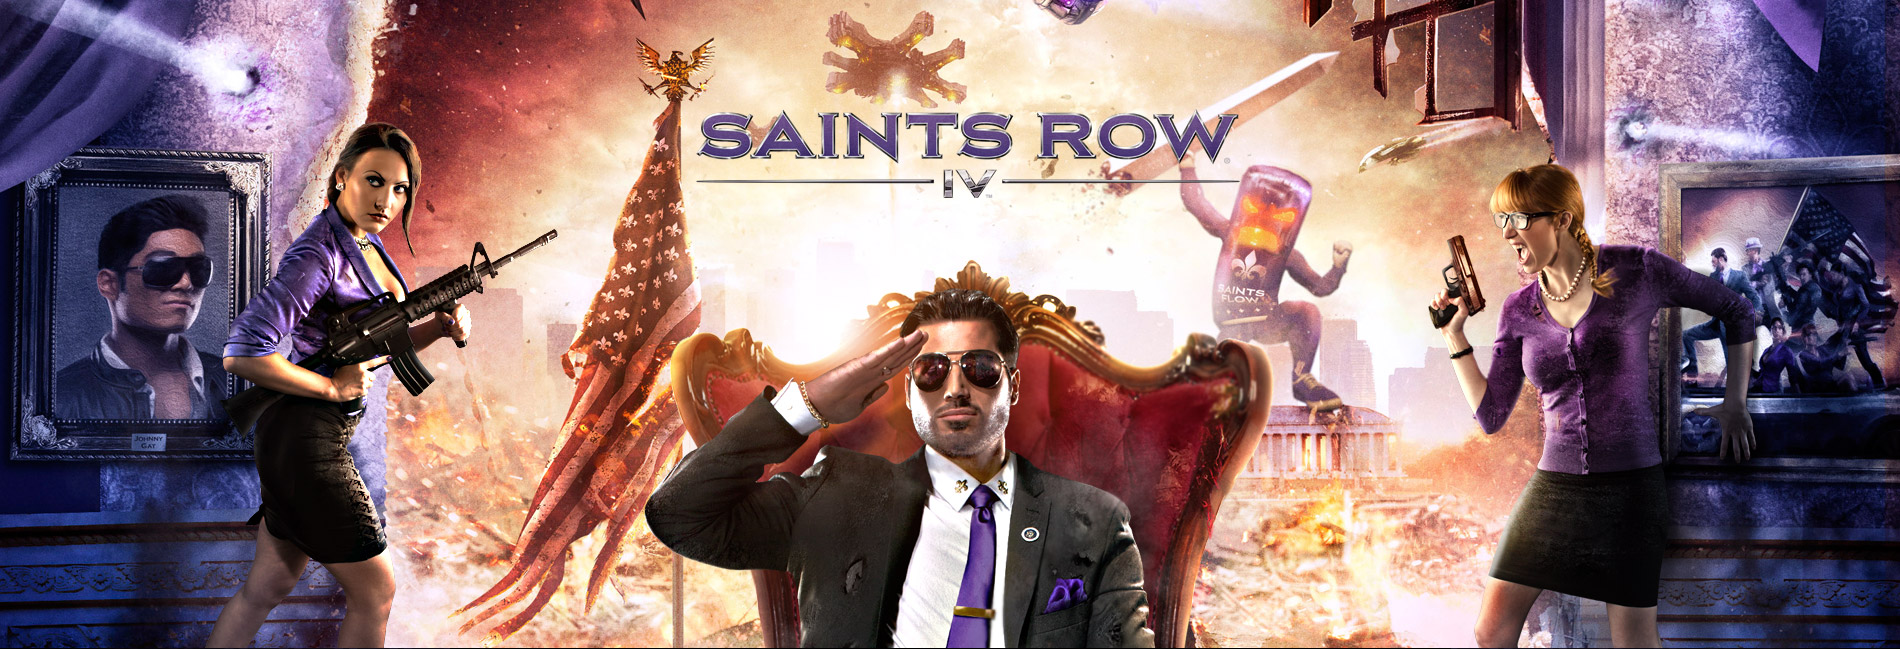 Amazing Saints Row IV Pictures & Backgrounds